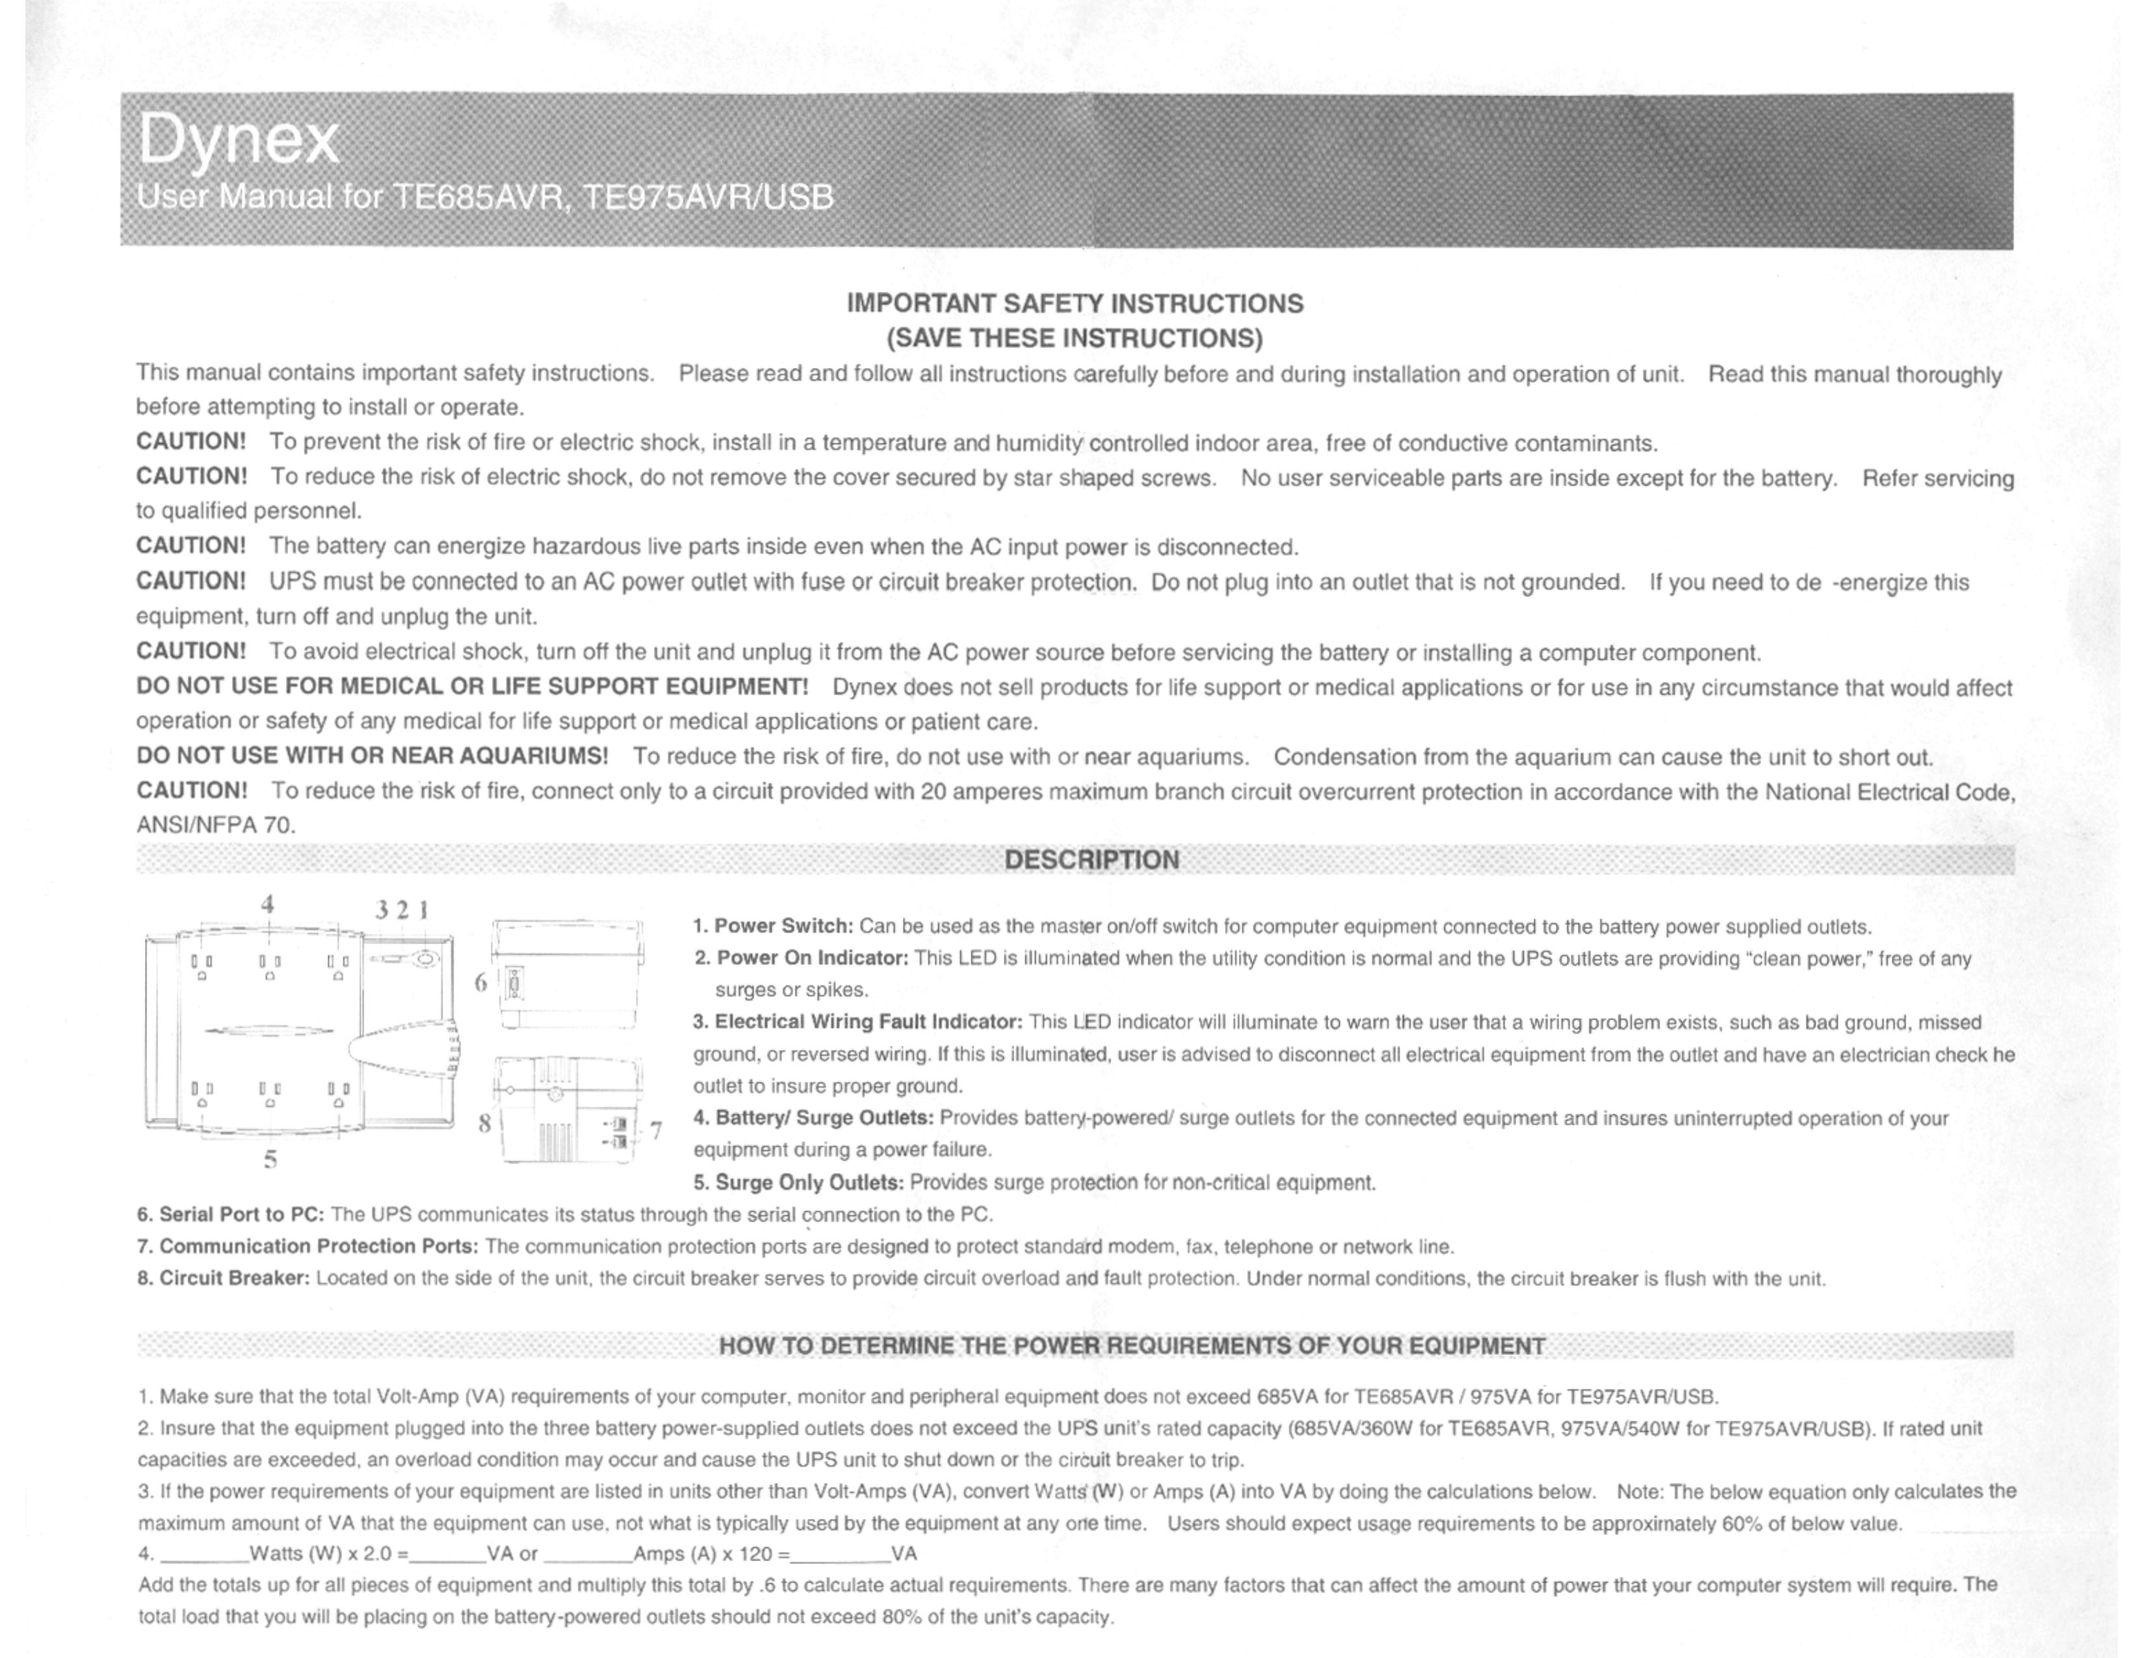 Dynex TE975AVR Power Supply User Manual